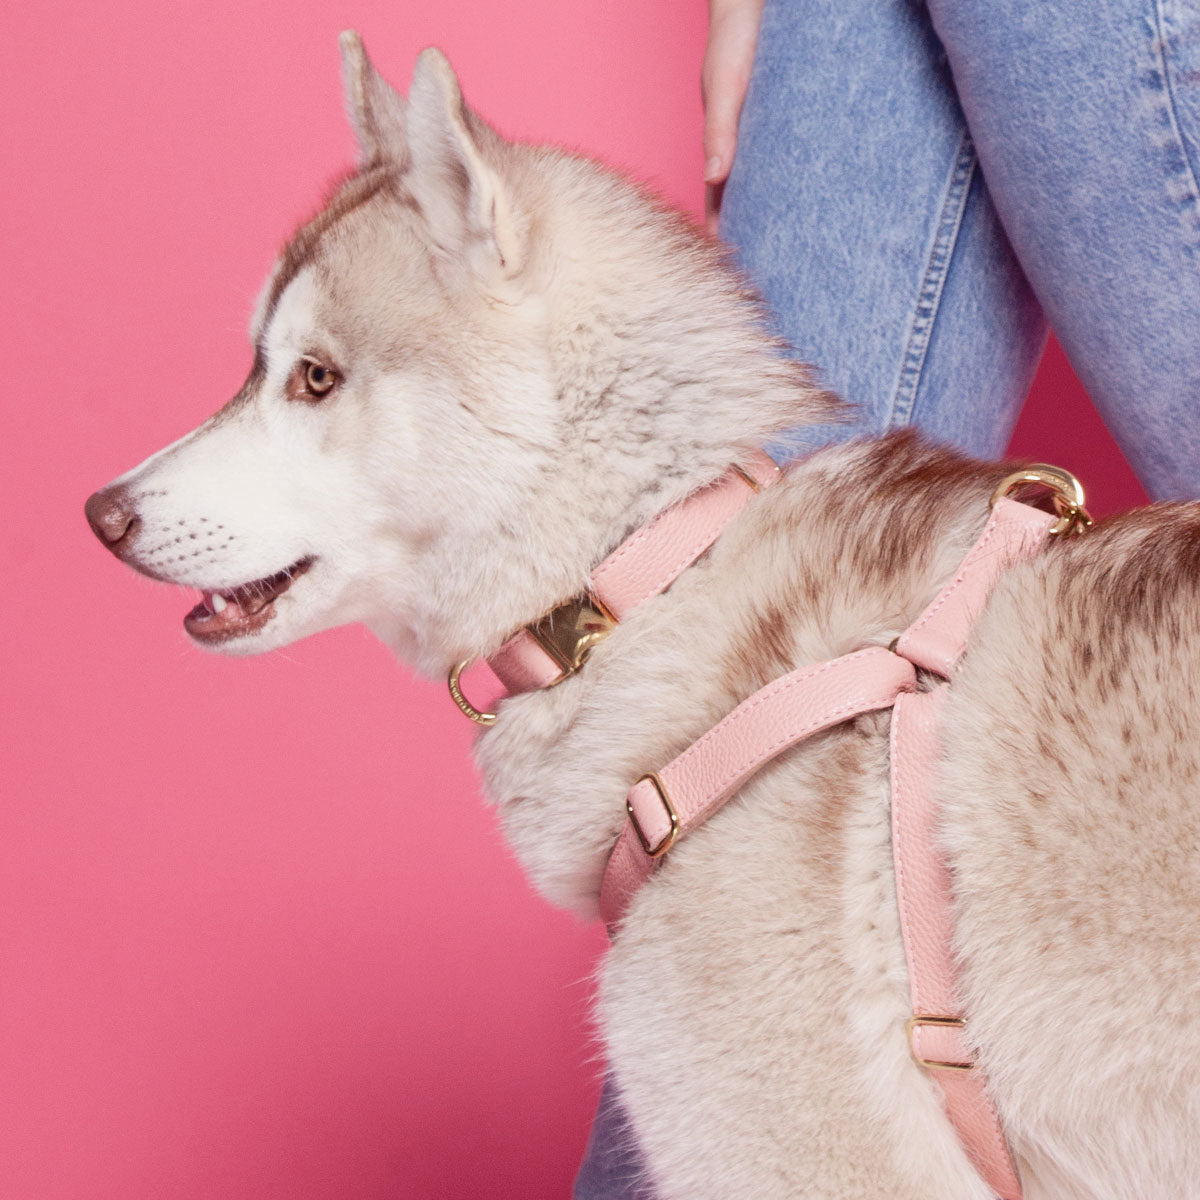 Leather Dog Harness - Pink - RYAN London